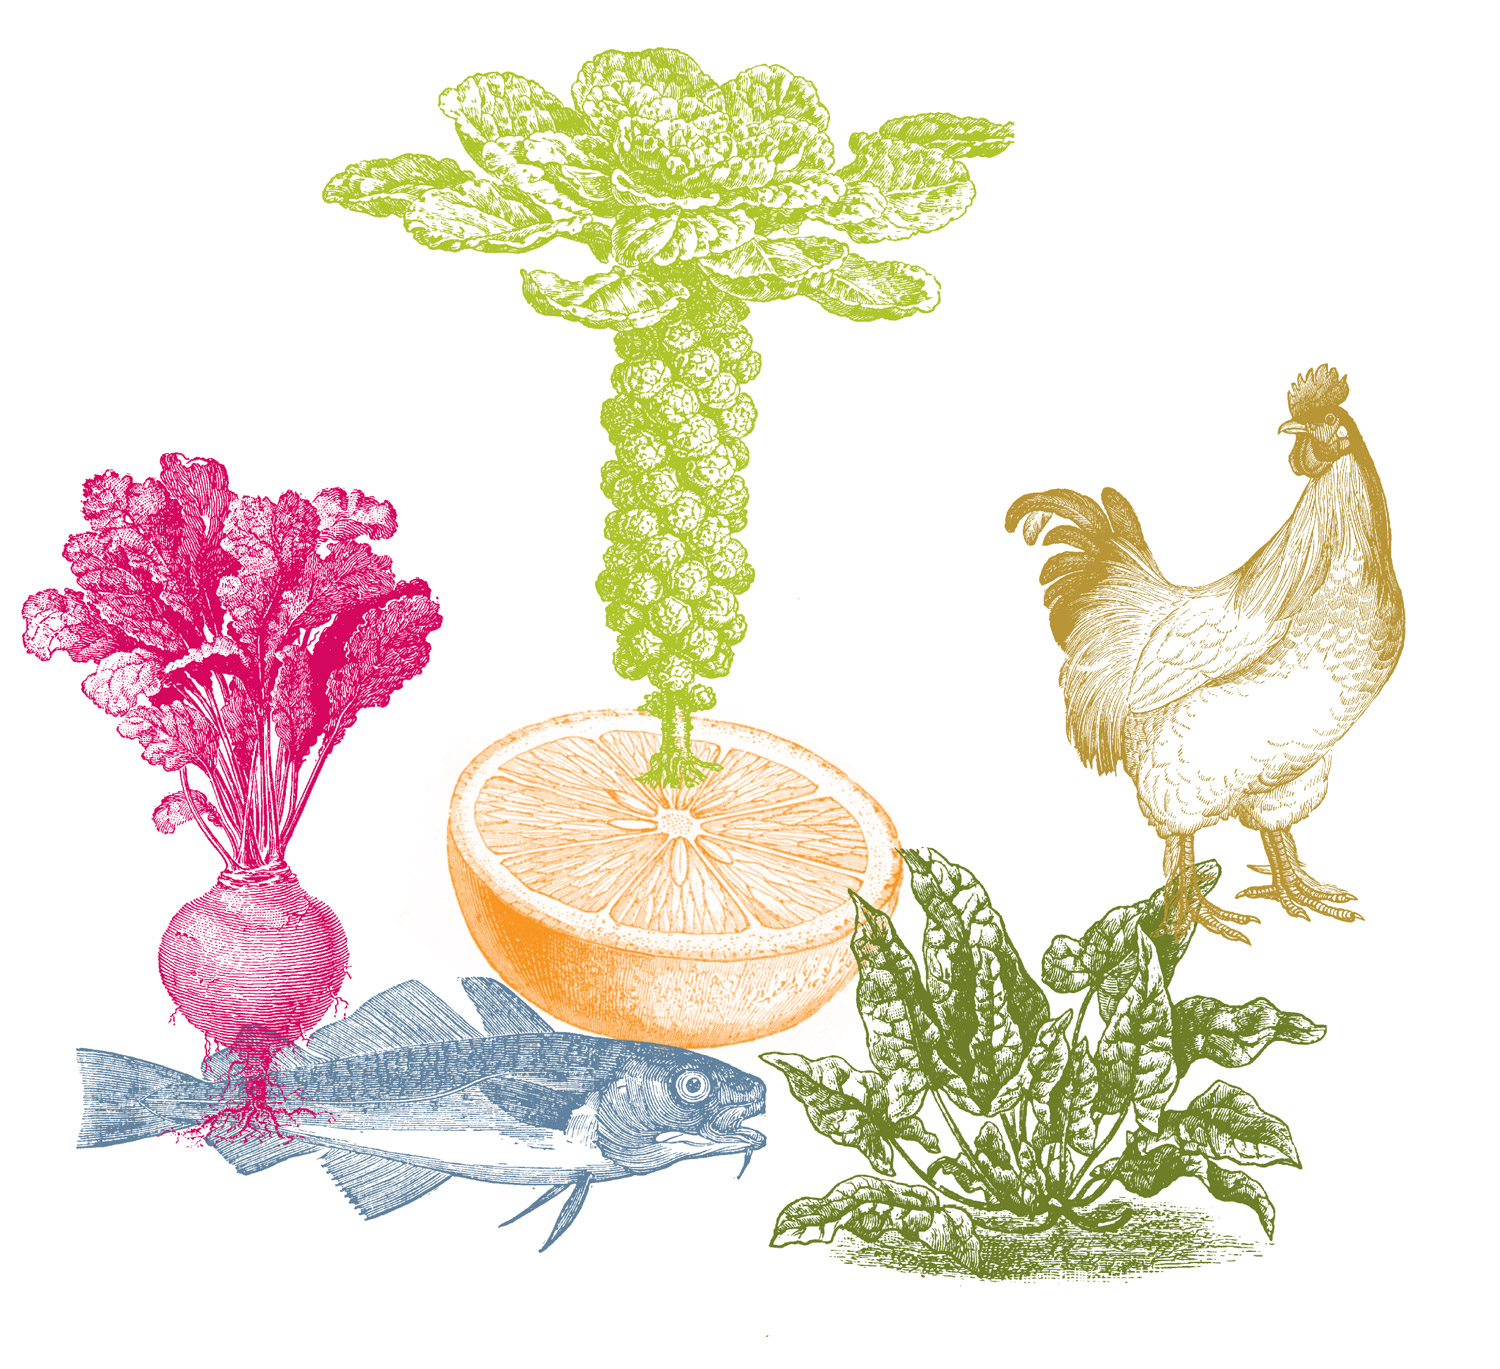 illustration of healthy food